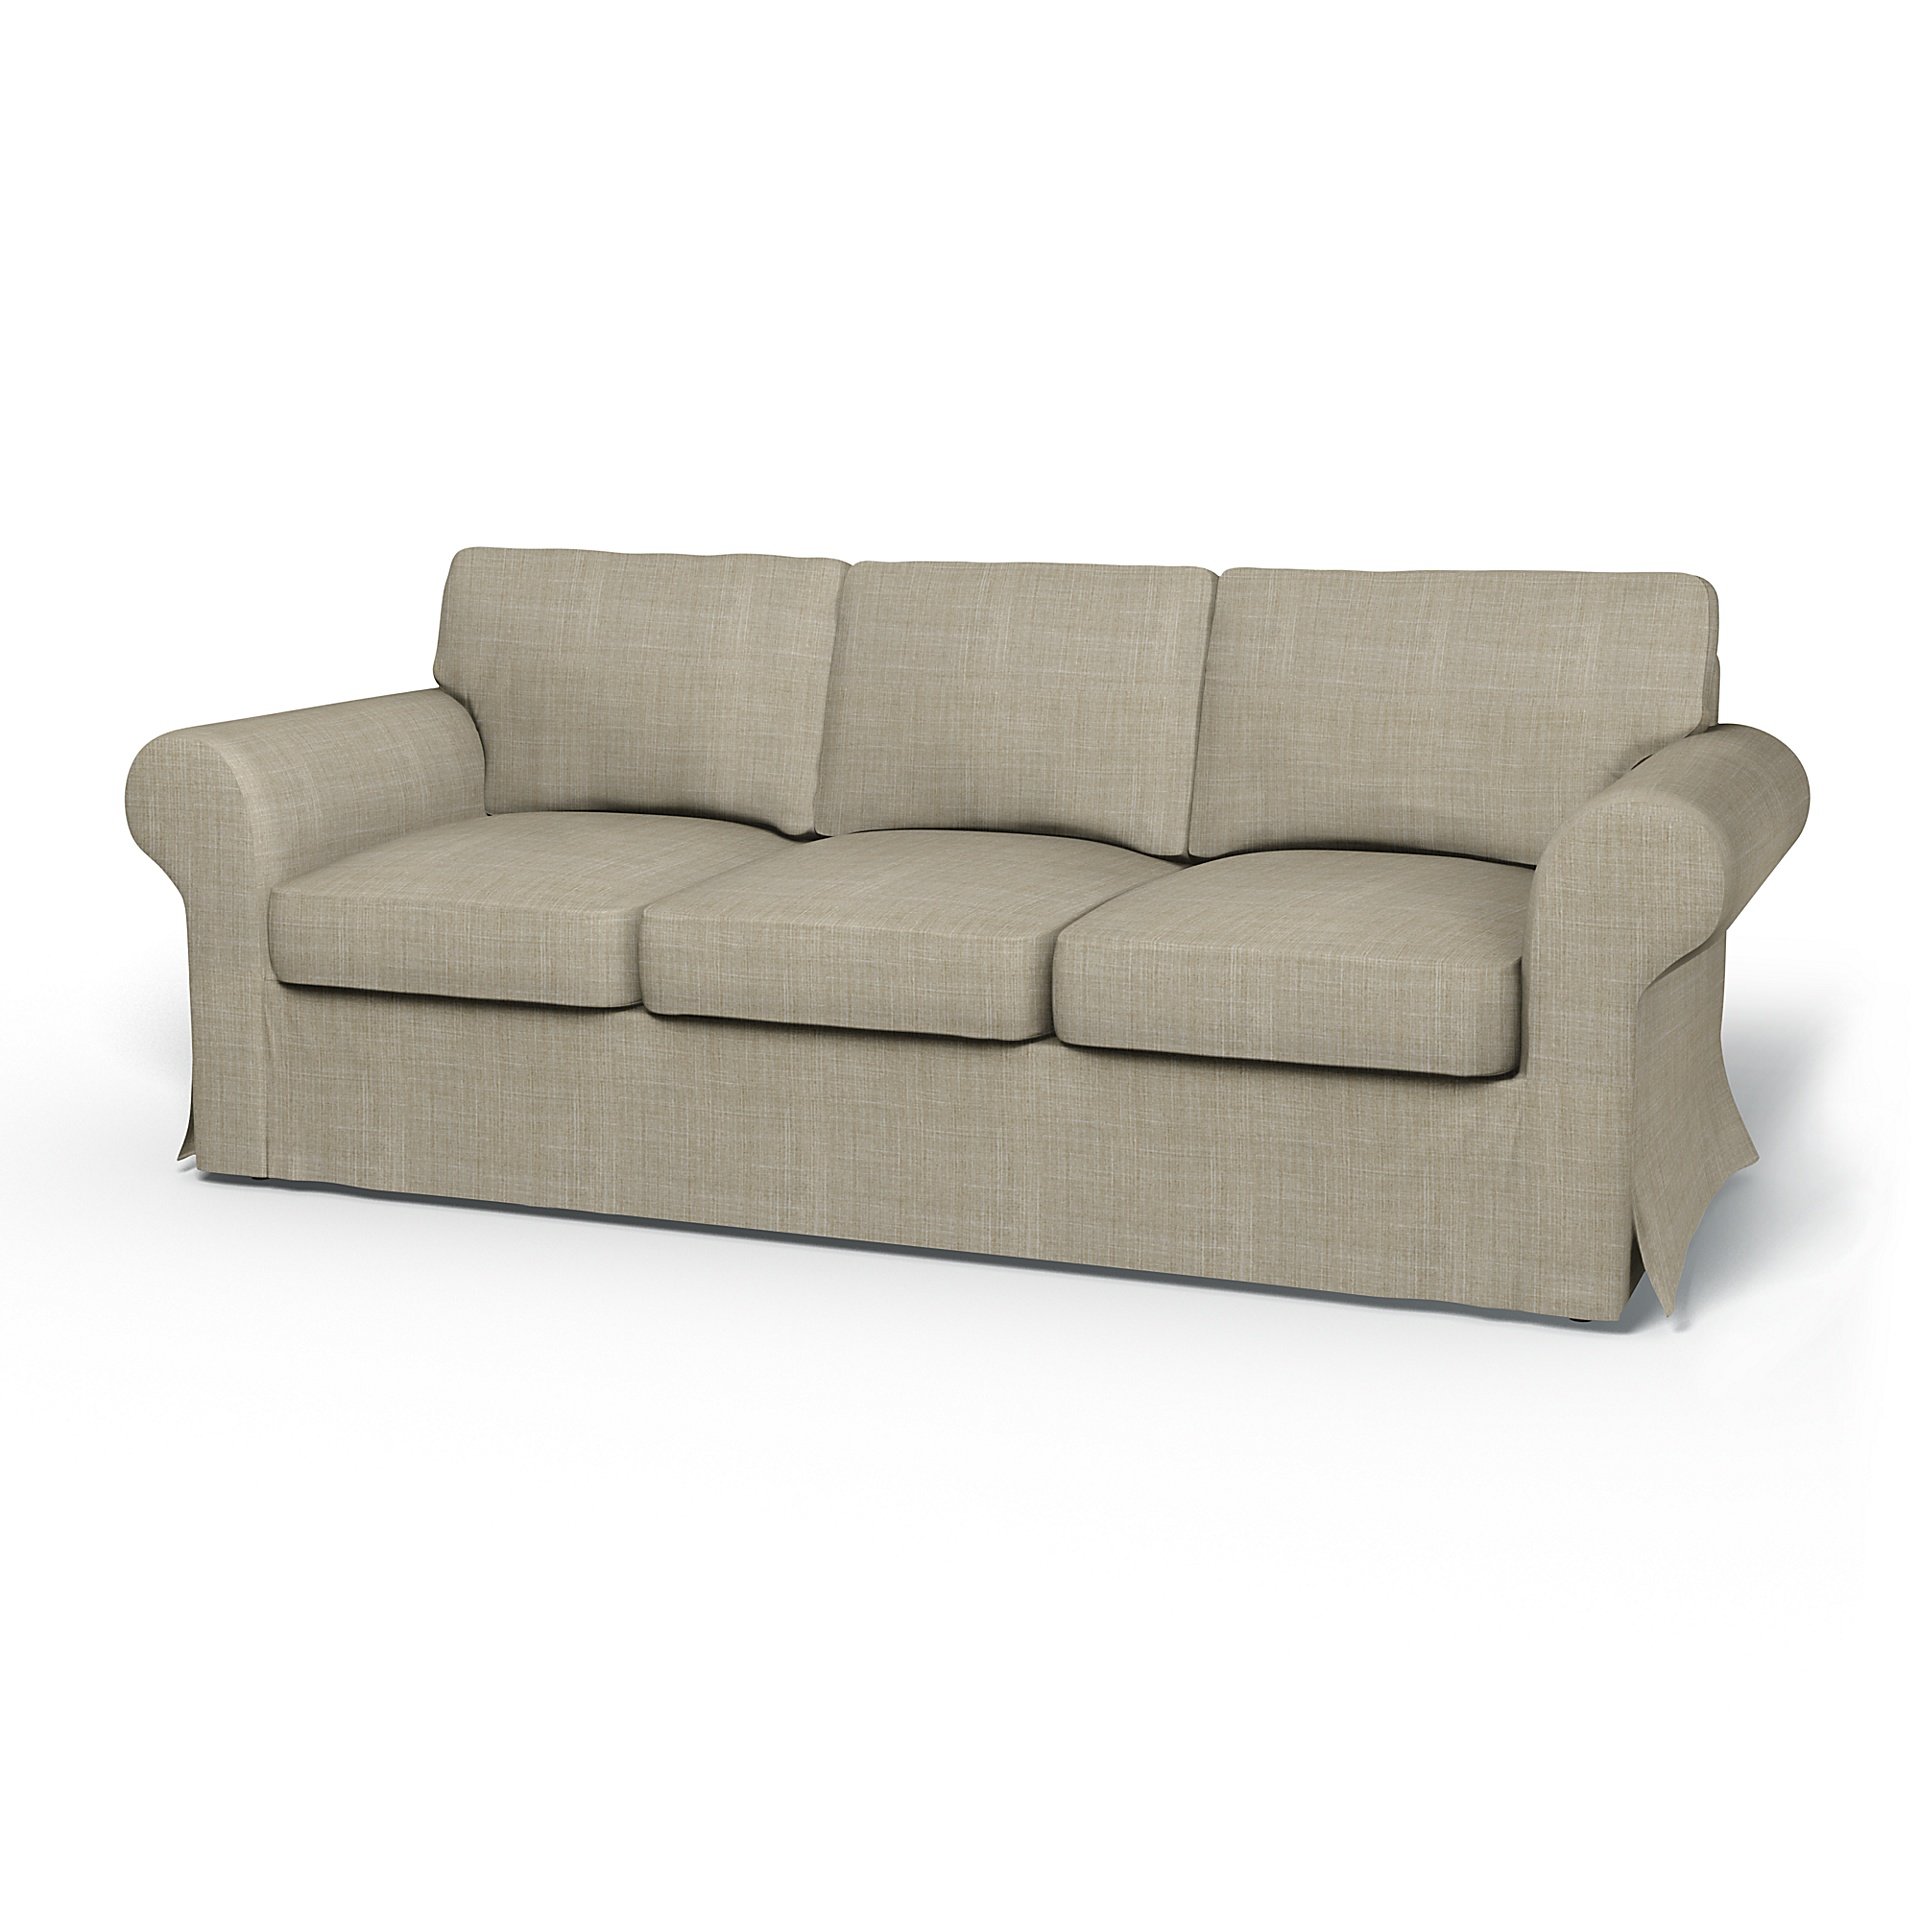 IKEA - Ektorp 3 Seater Sofa Bed Cover, Sand Beige, Boucle & Texture - Bemz